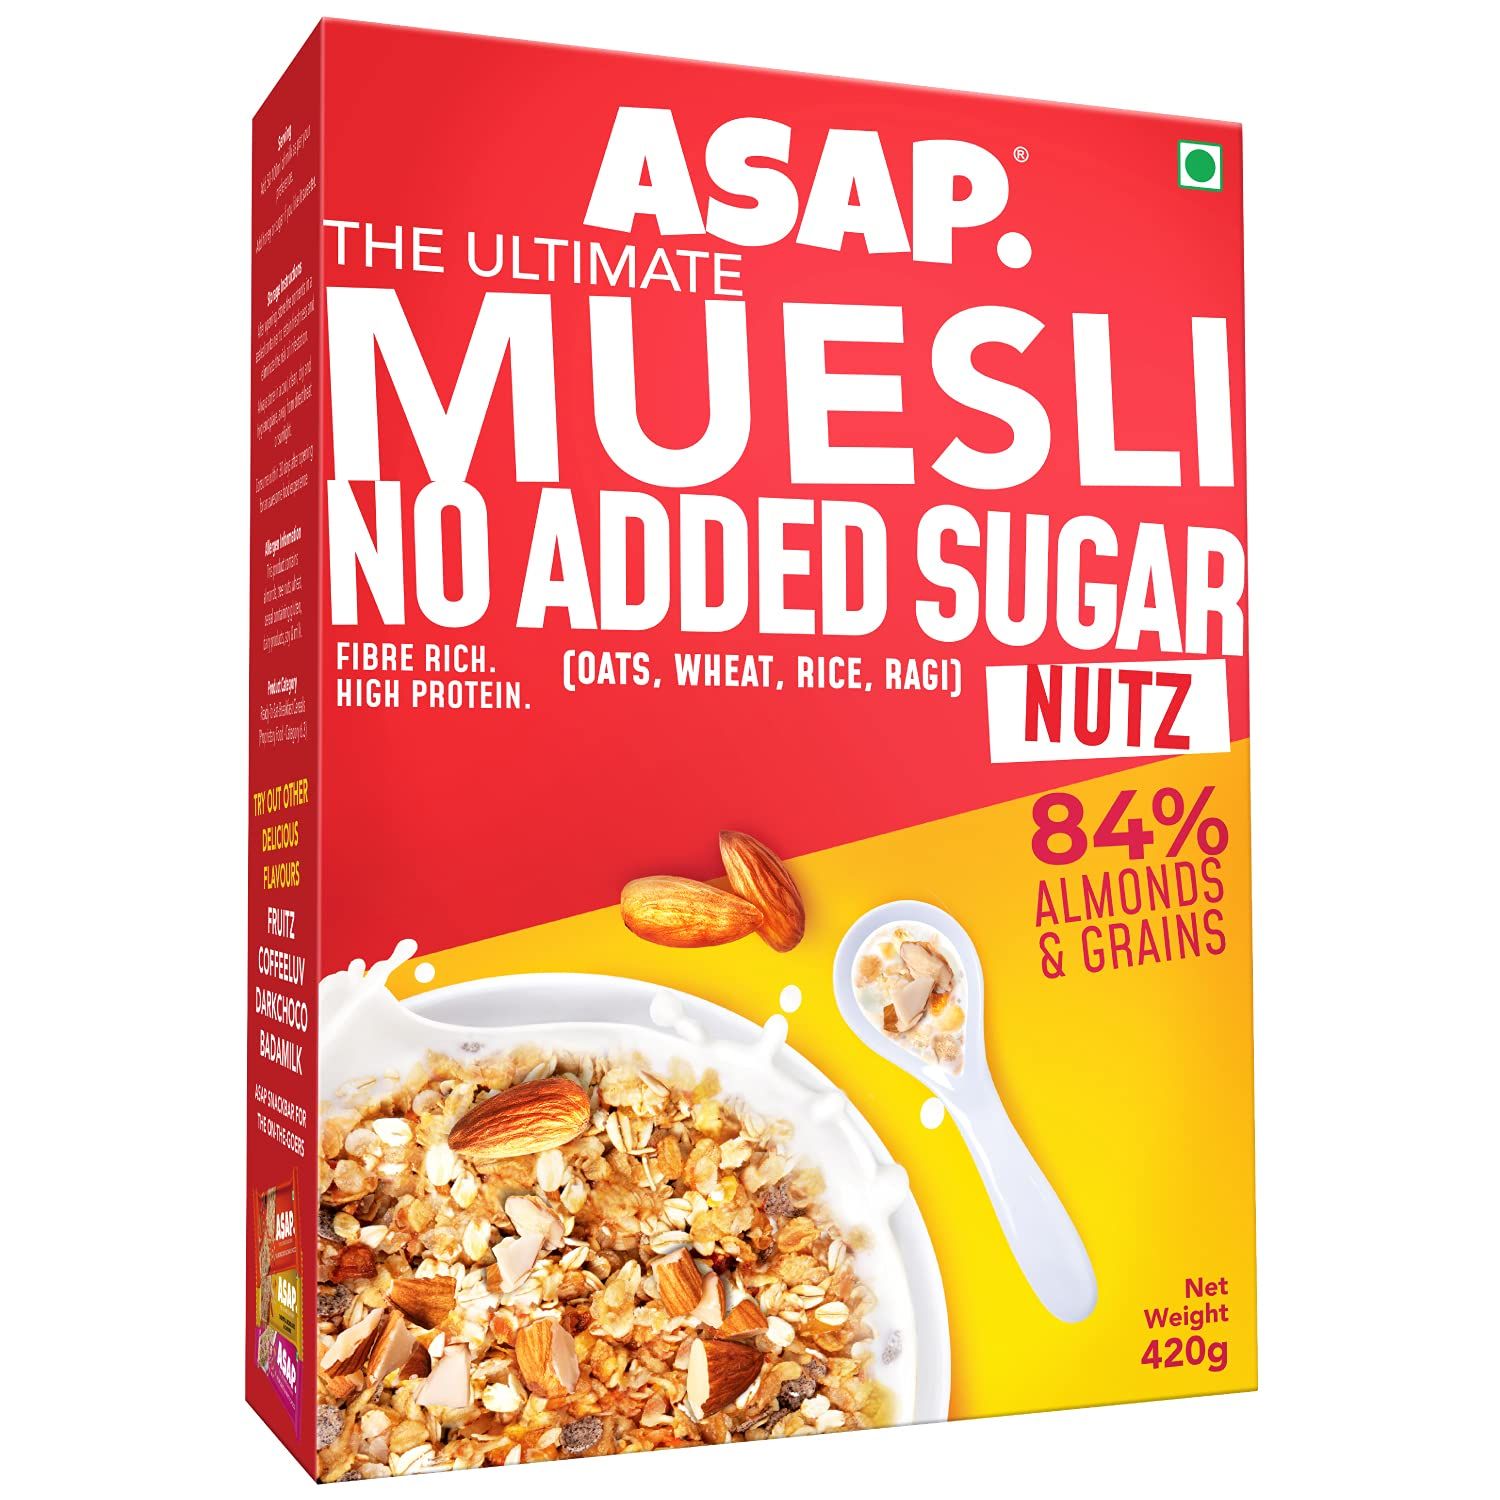 ASAP Ultimate Muesli No Added Sugar Image